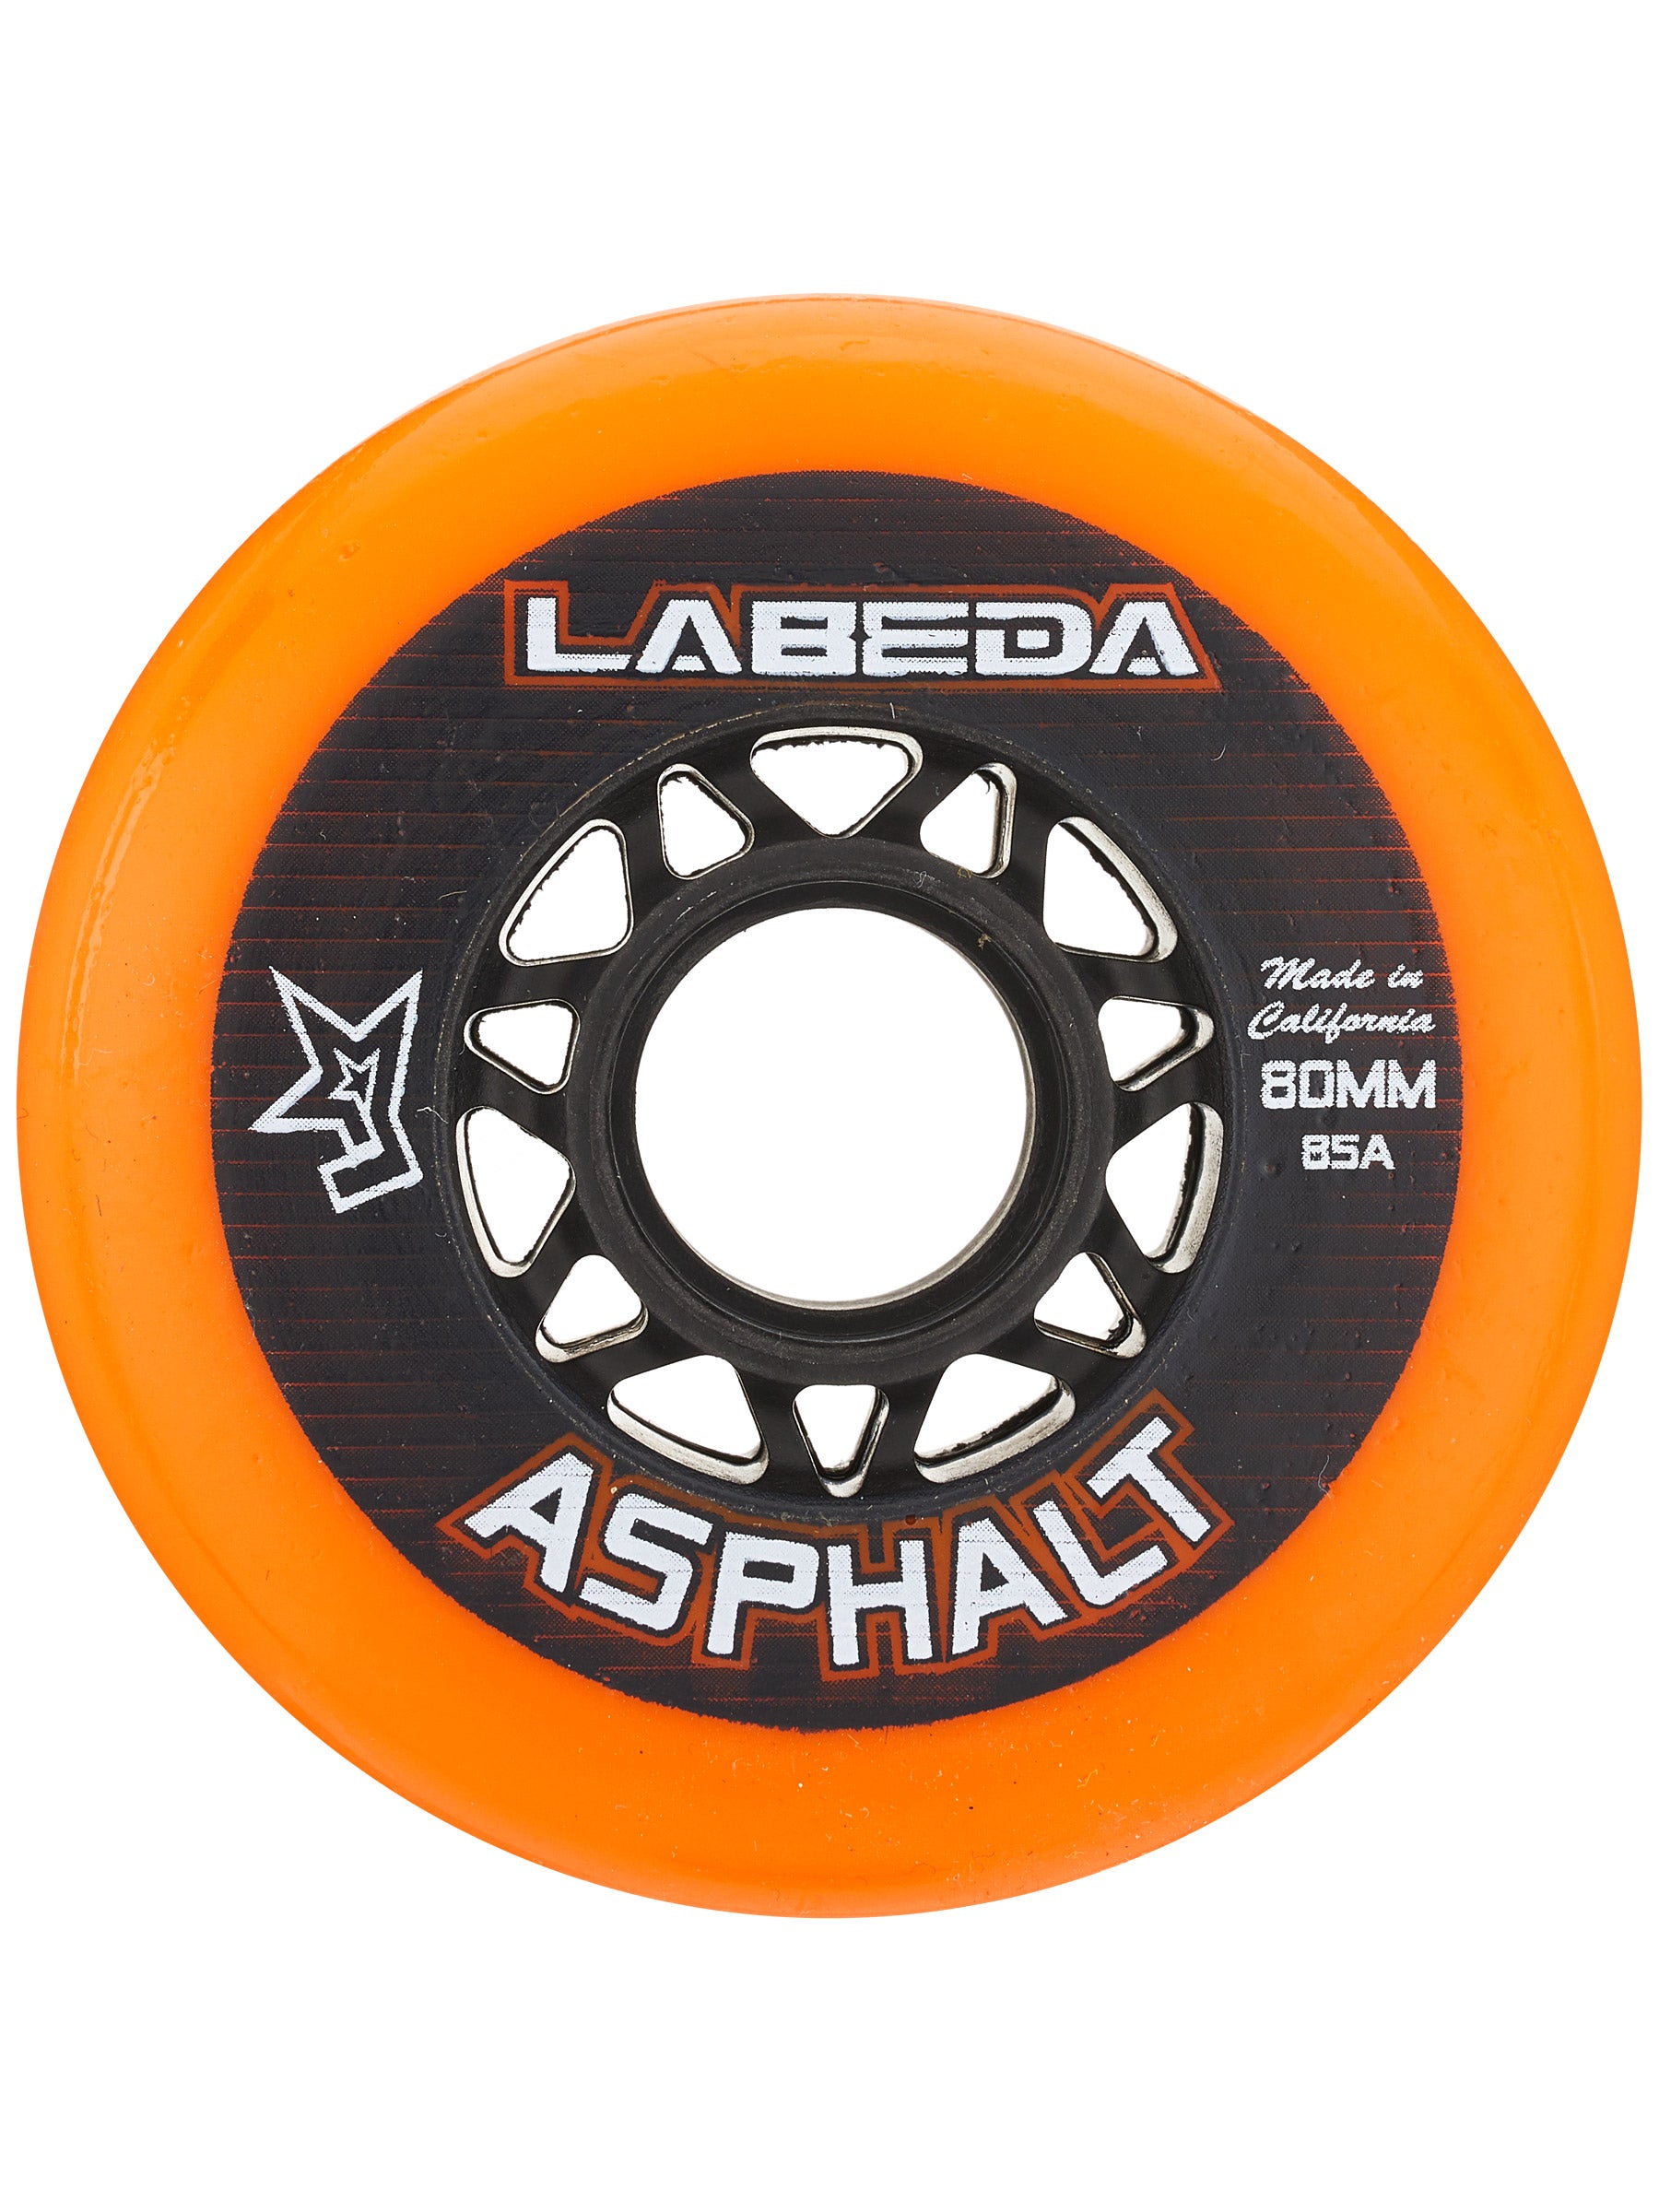 Labeda Hockey Wheels Asphalt Orange Free US Shipping 